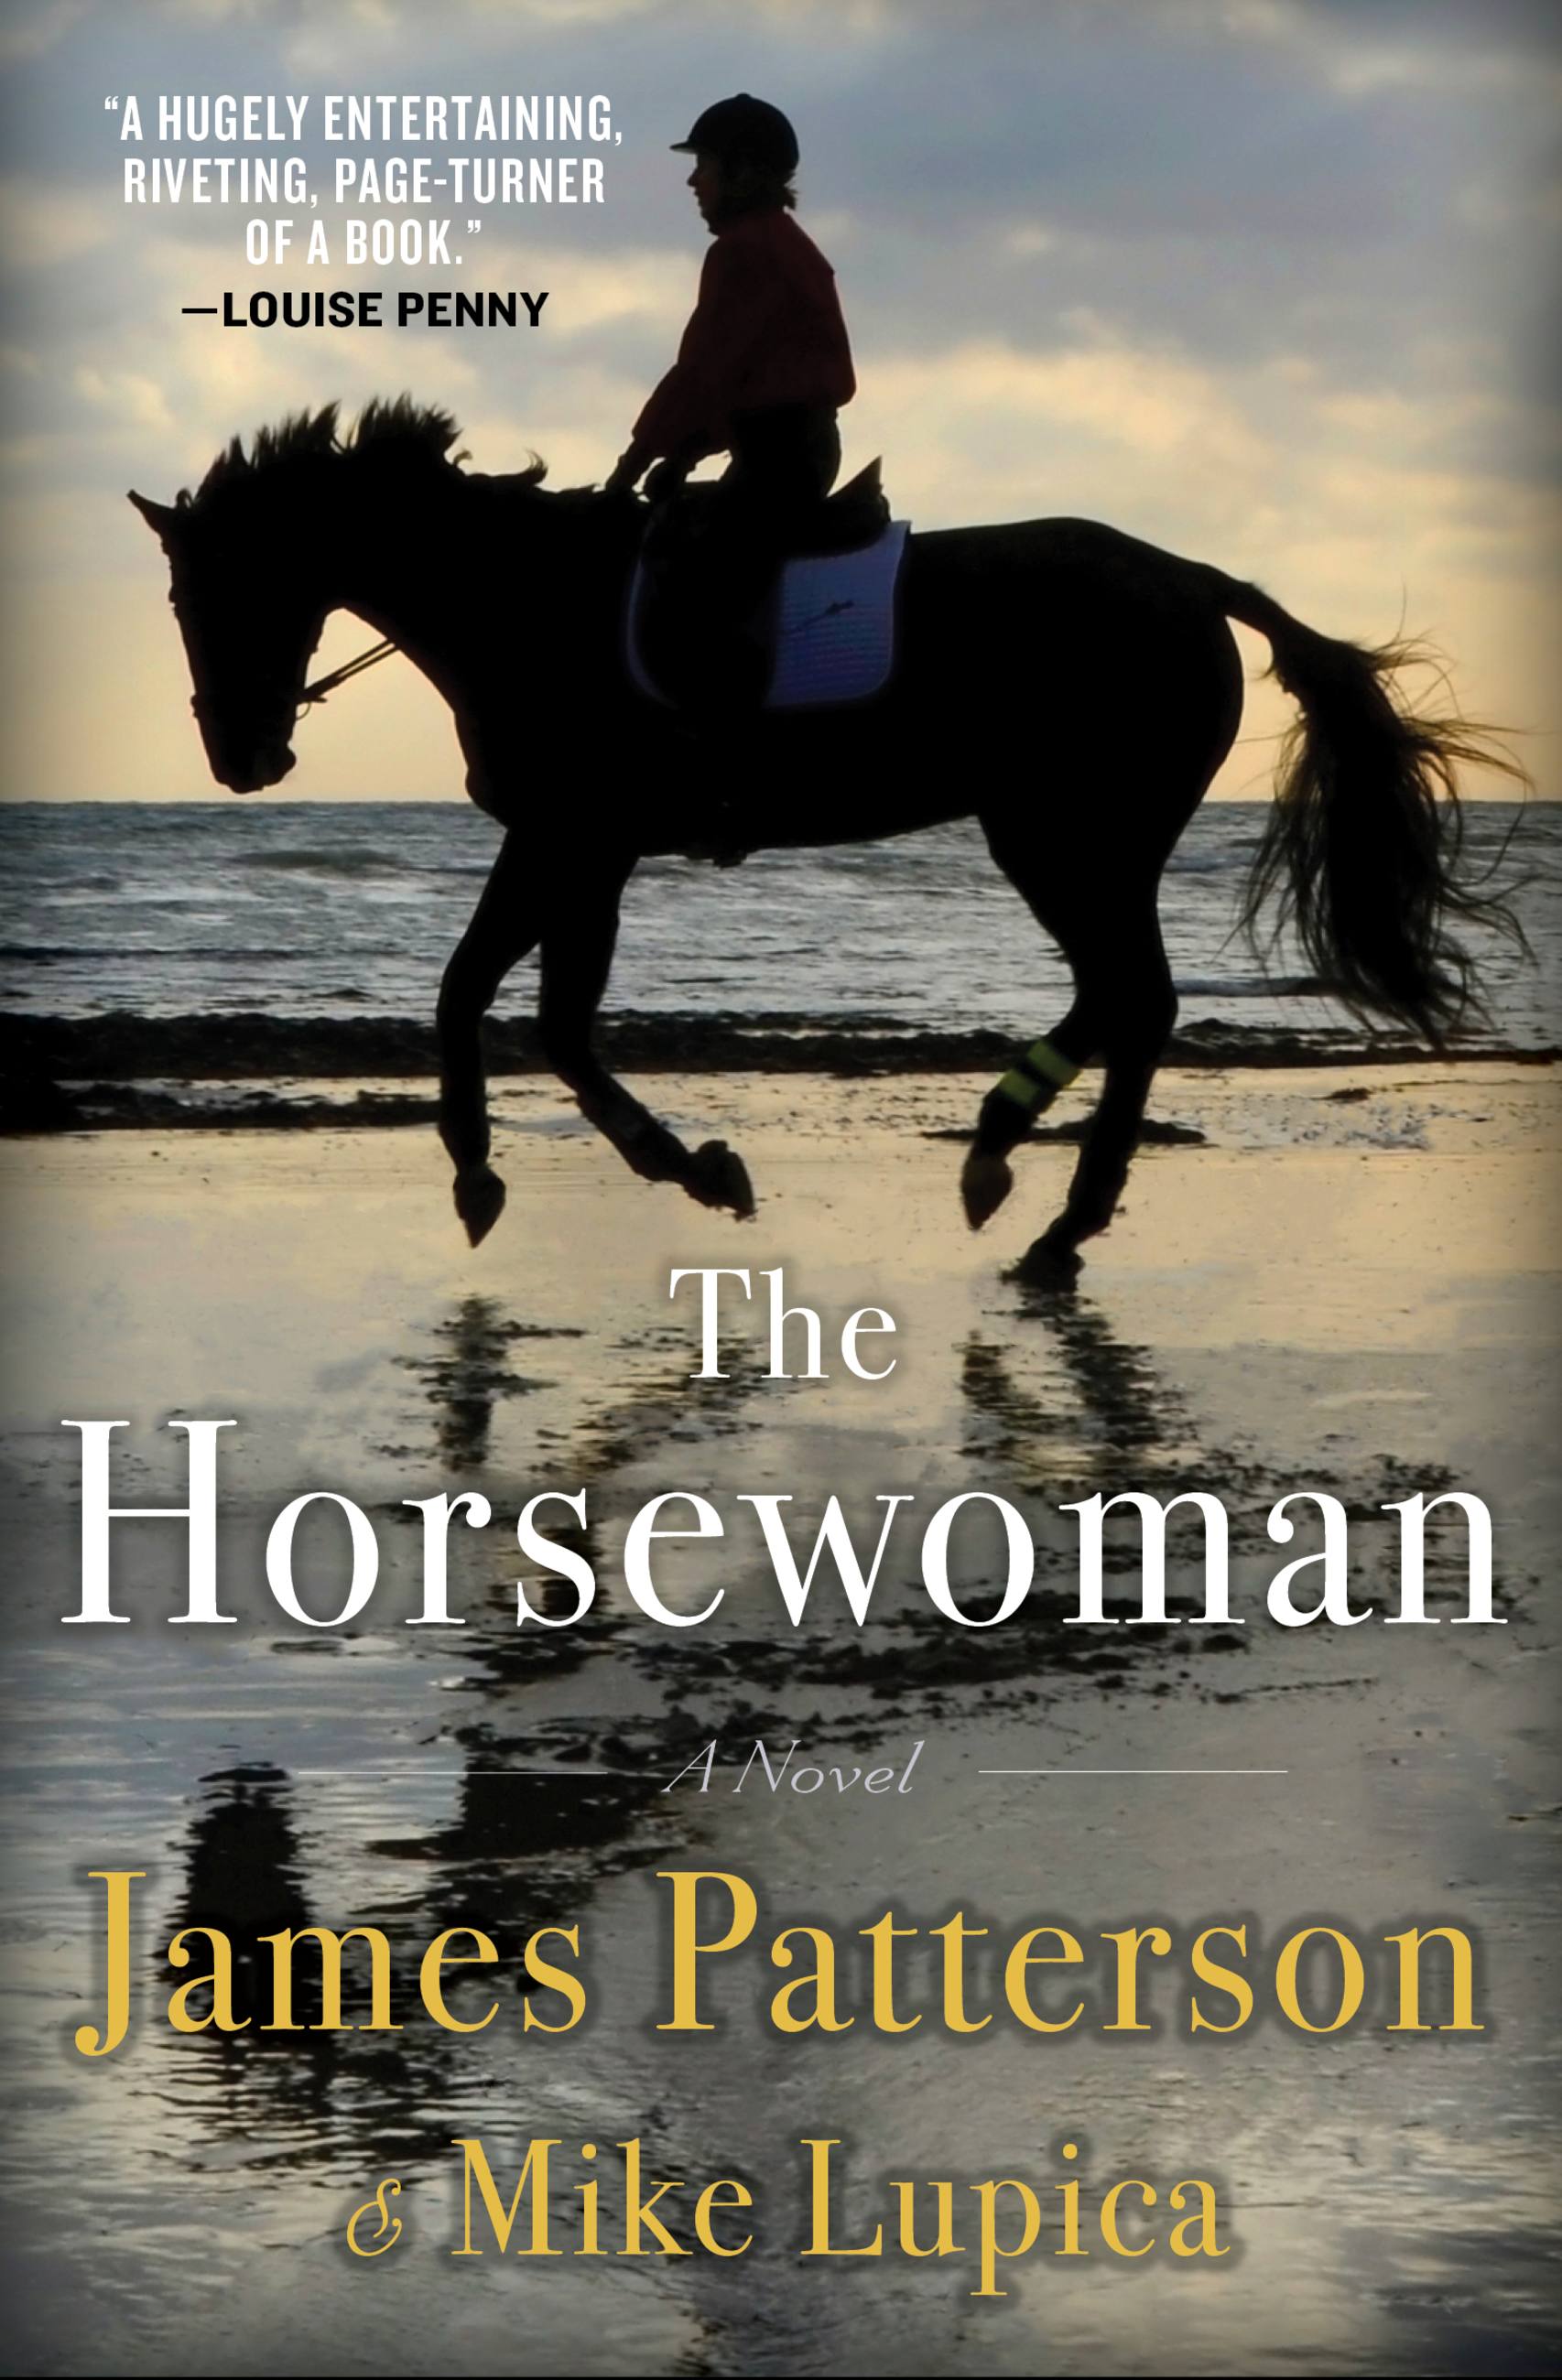 Horsewoman Print